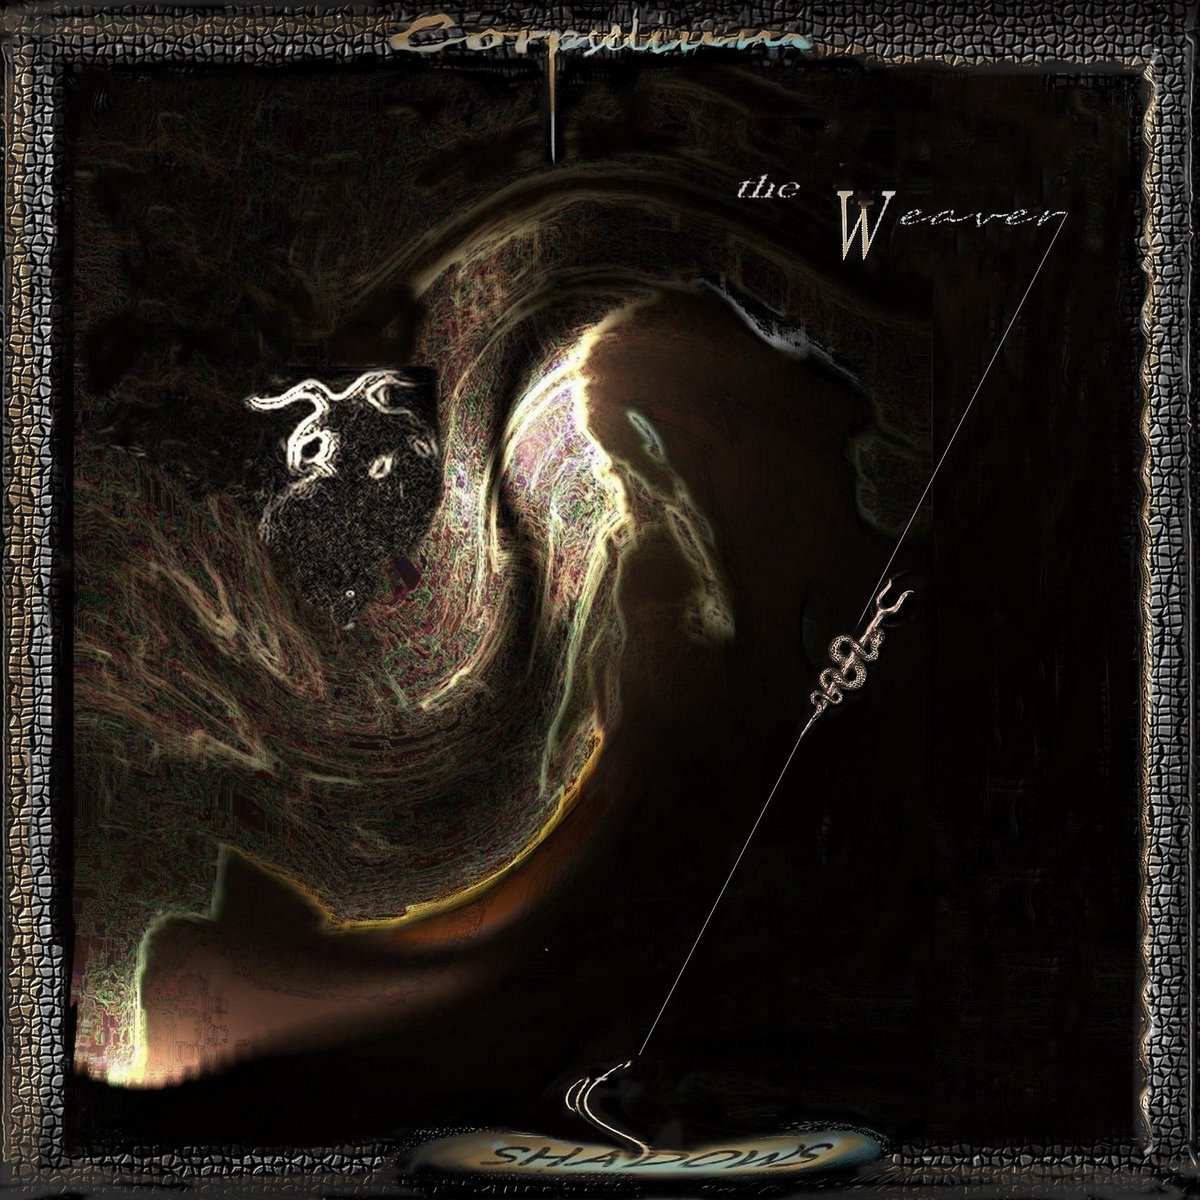 Жизнь и смерть в поэзии. Corpselium Band. Draco Hypnalis - Weavers of unrest (2005). Corpselium - cascinomancy. 9 Years of Shadows.